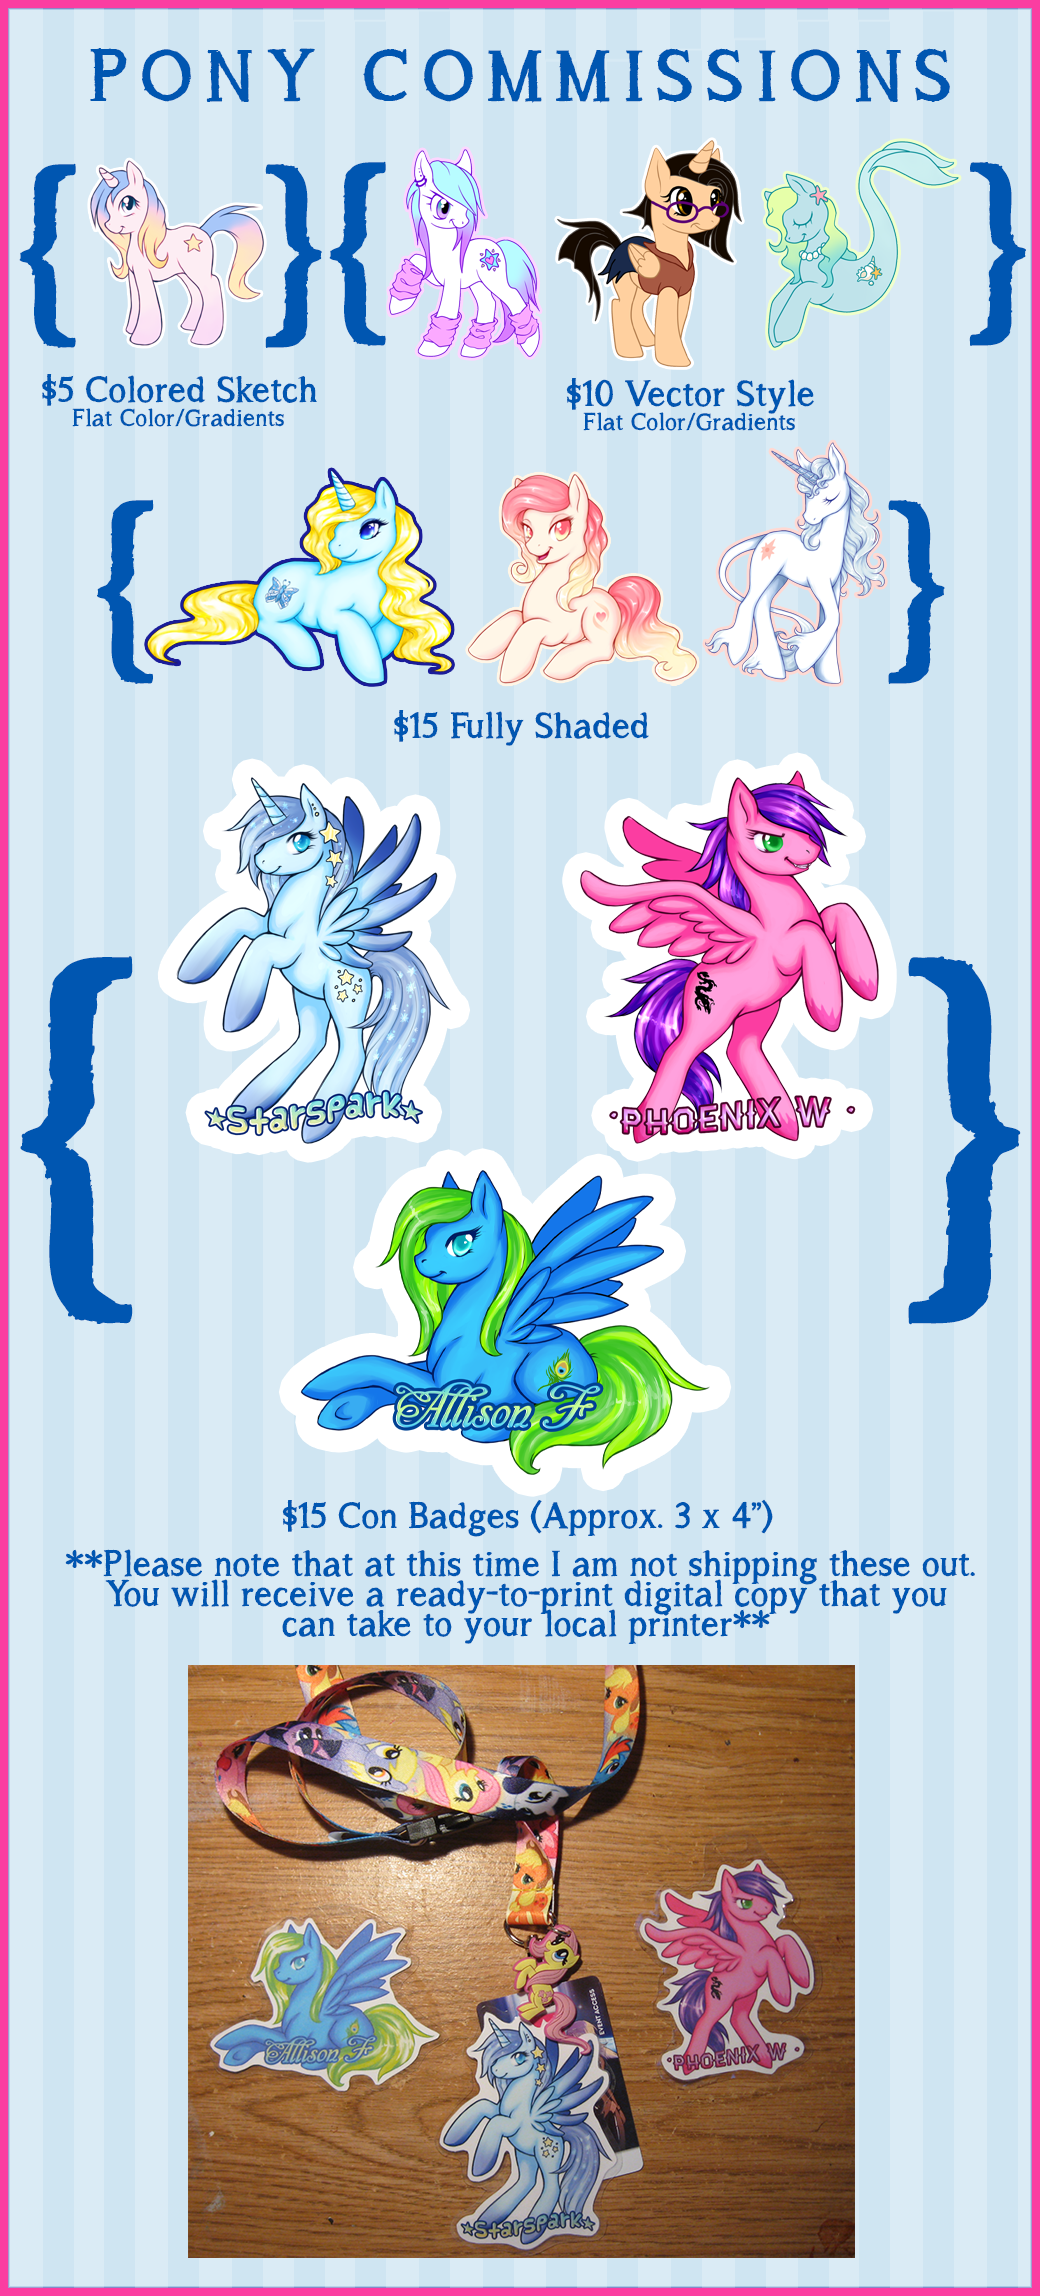 Pony Commission Information